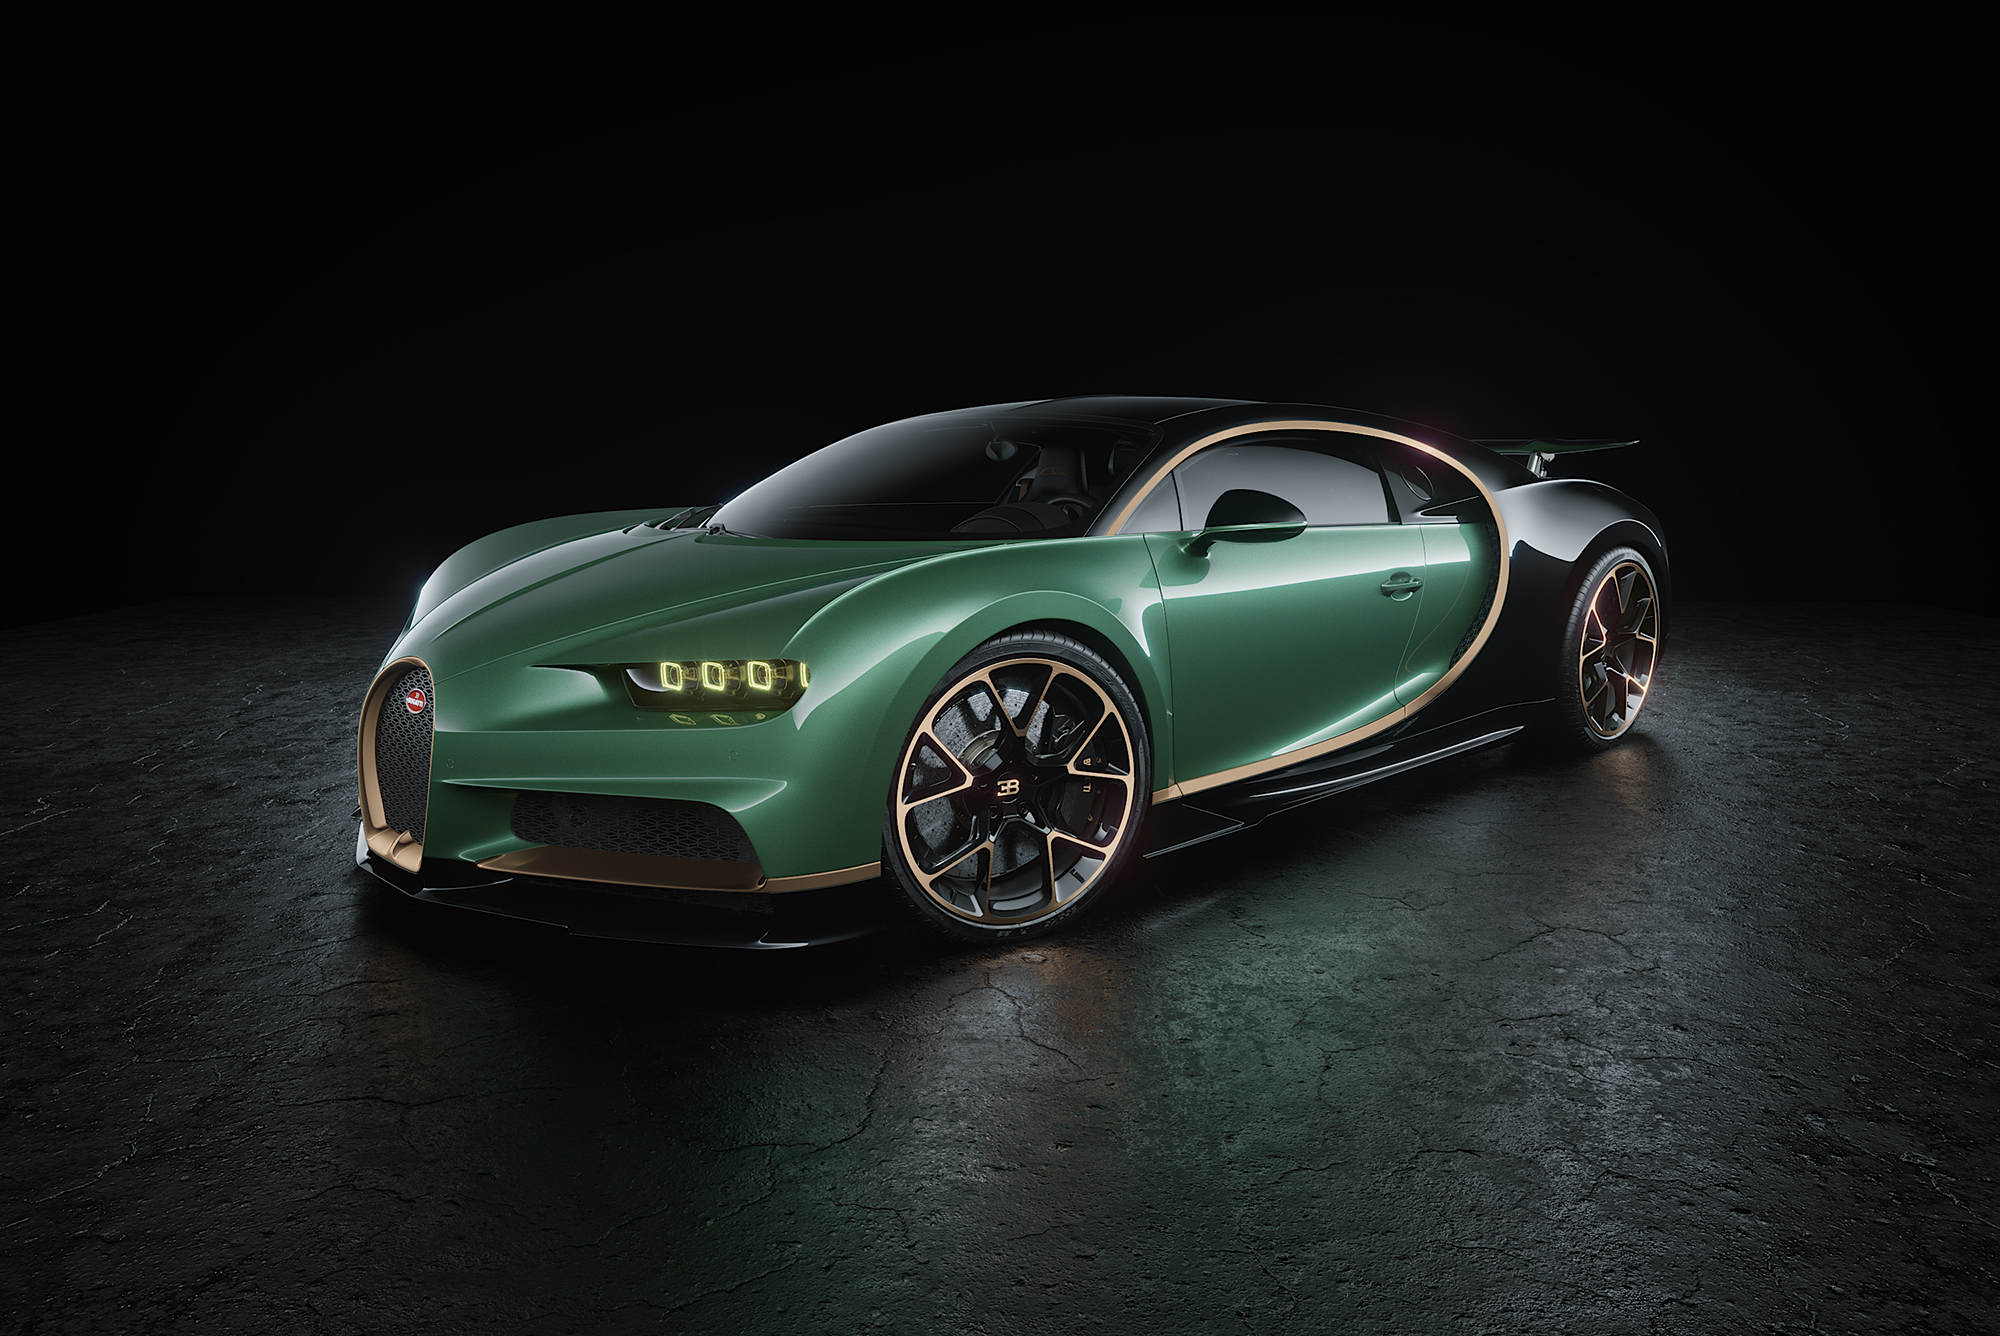 Green Bugatti Chiron CGI, HD Cars, 4k Wallpapers, Images ...